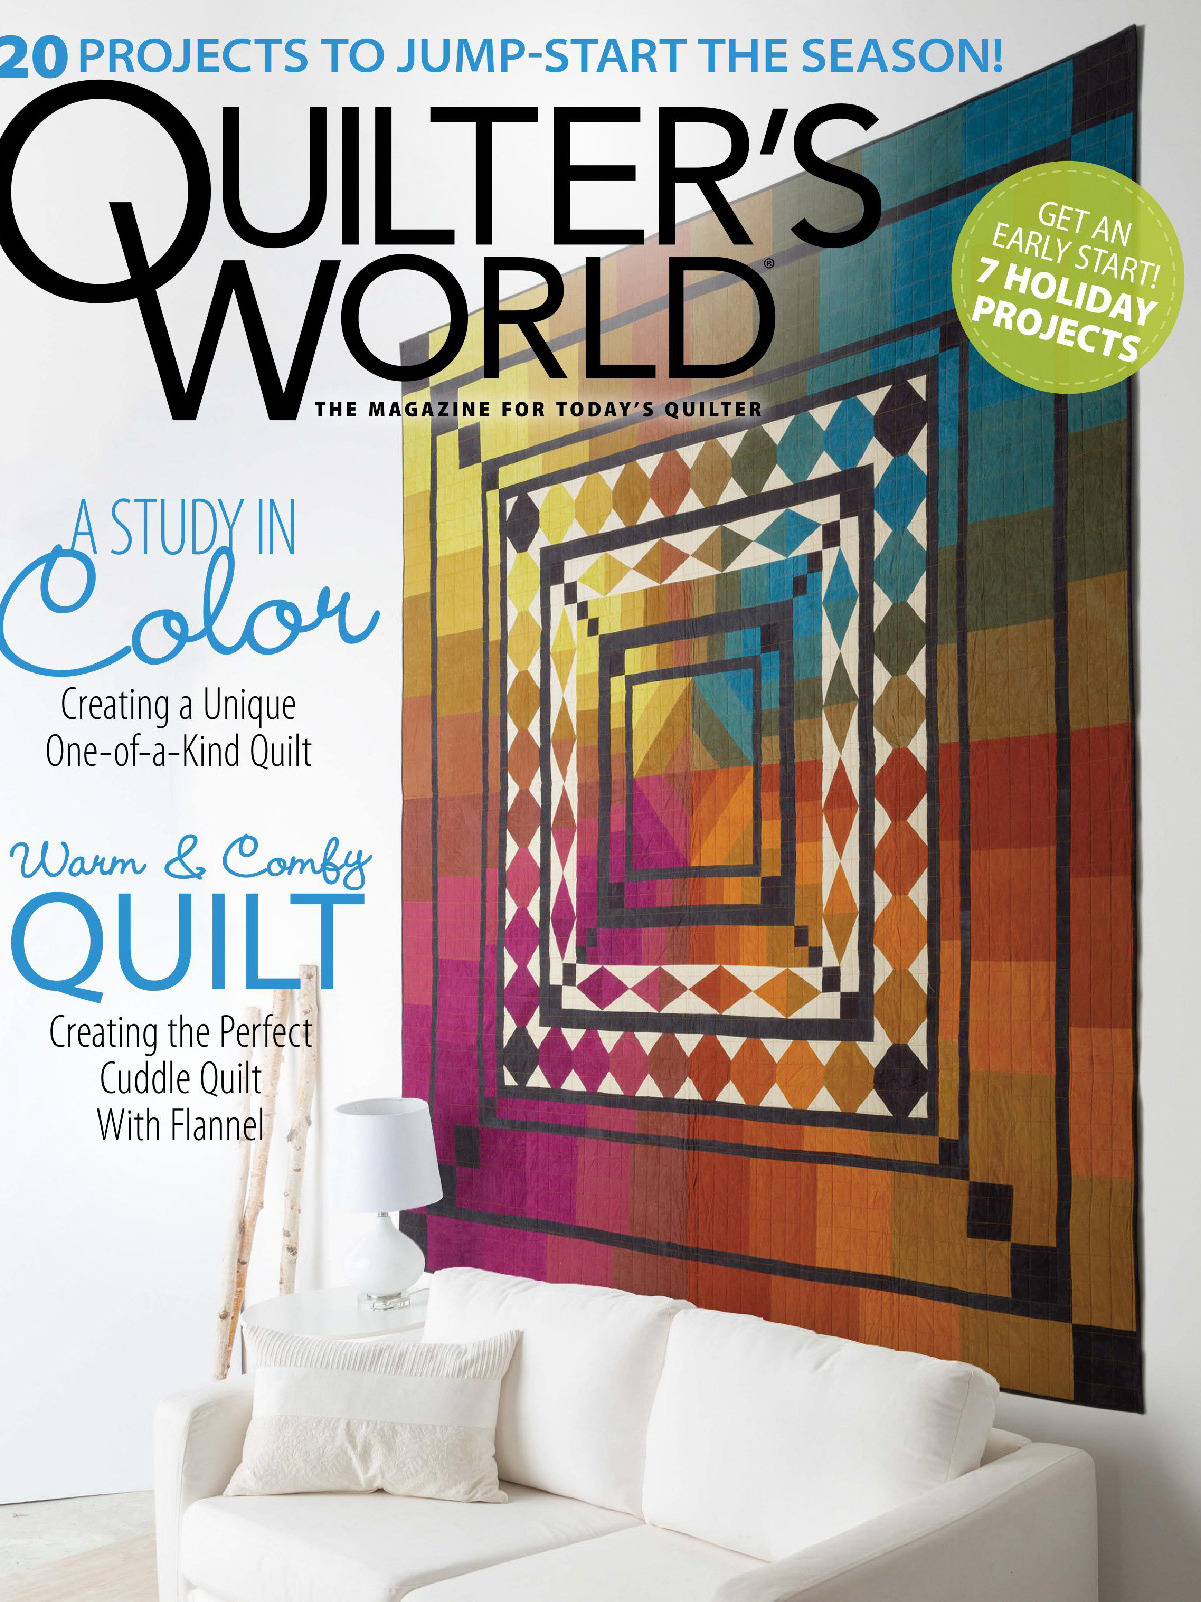 《Quilter's World》欧美时尚家居杂志2019年秋季号